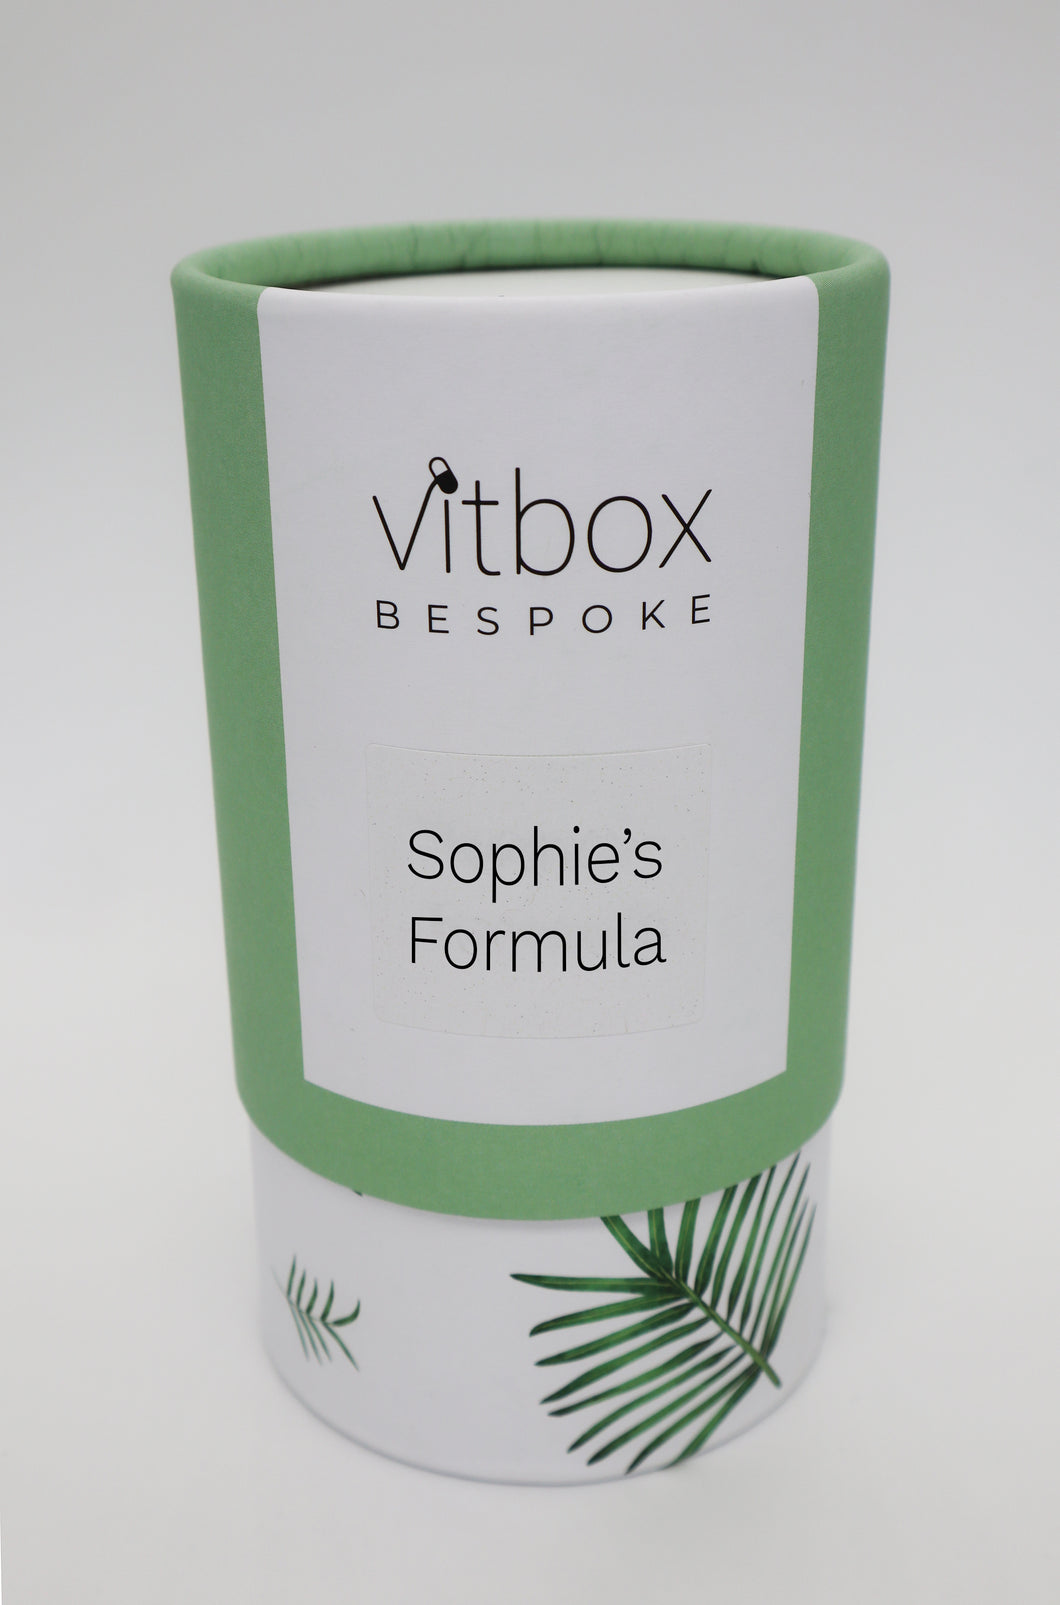 Sophie's Vitbox Bespoke